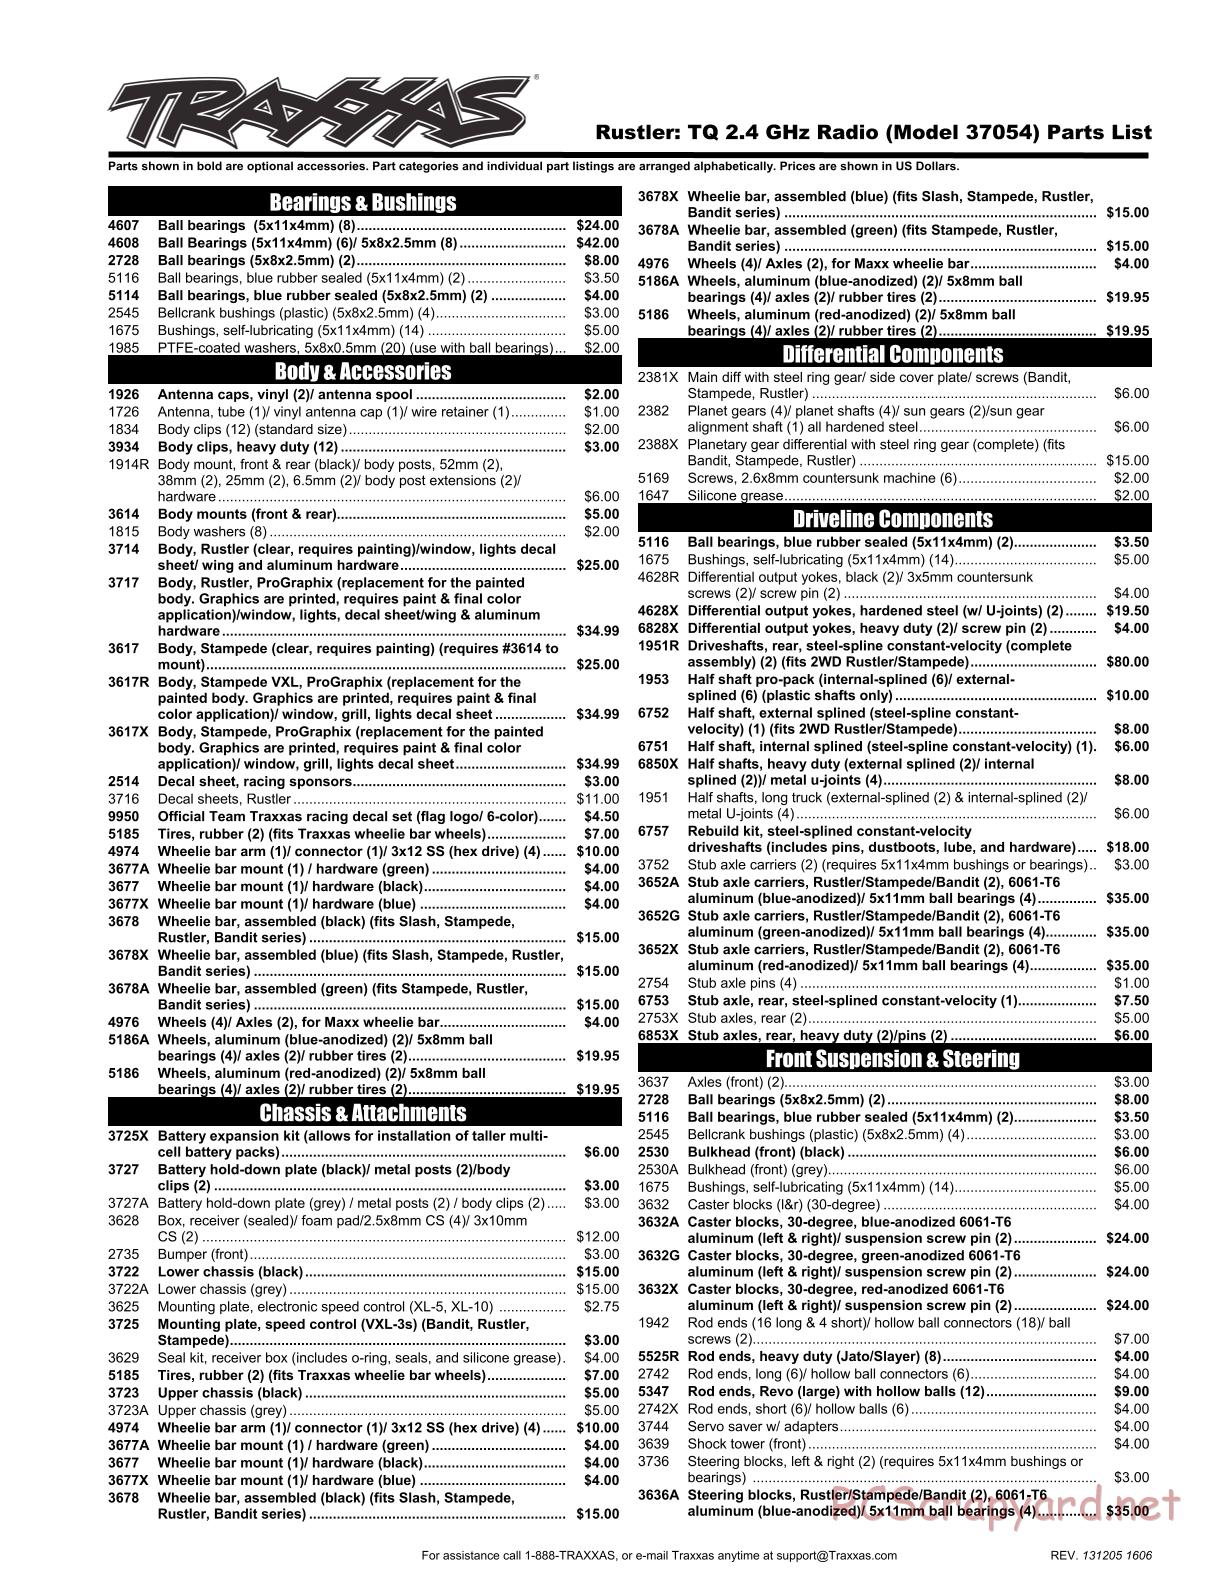 Traxxas - Rustler XL-5 (2013) - Parts List - Page 1